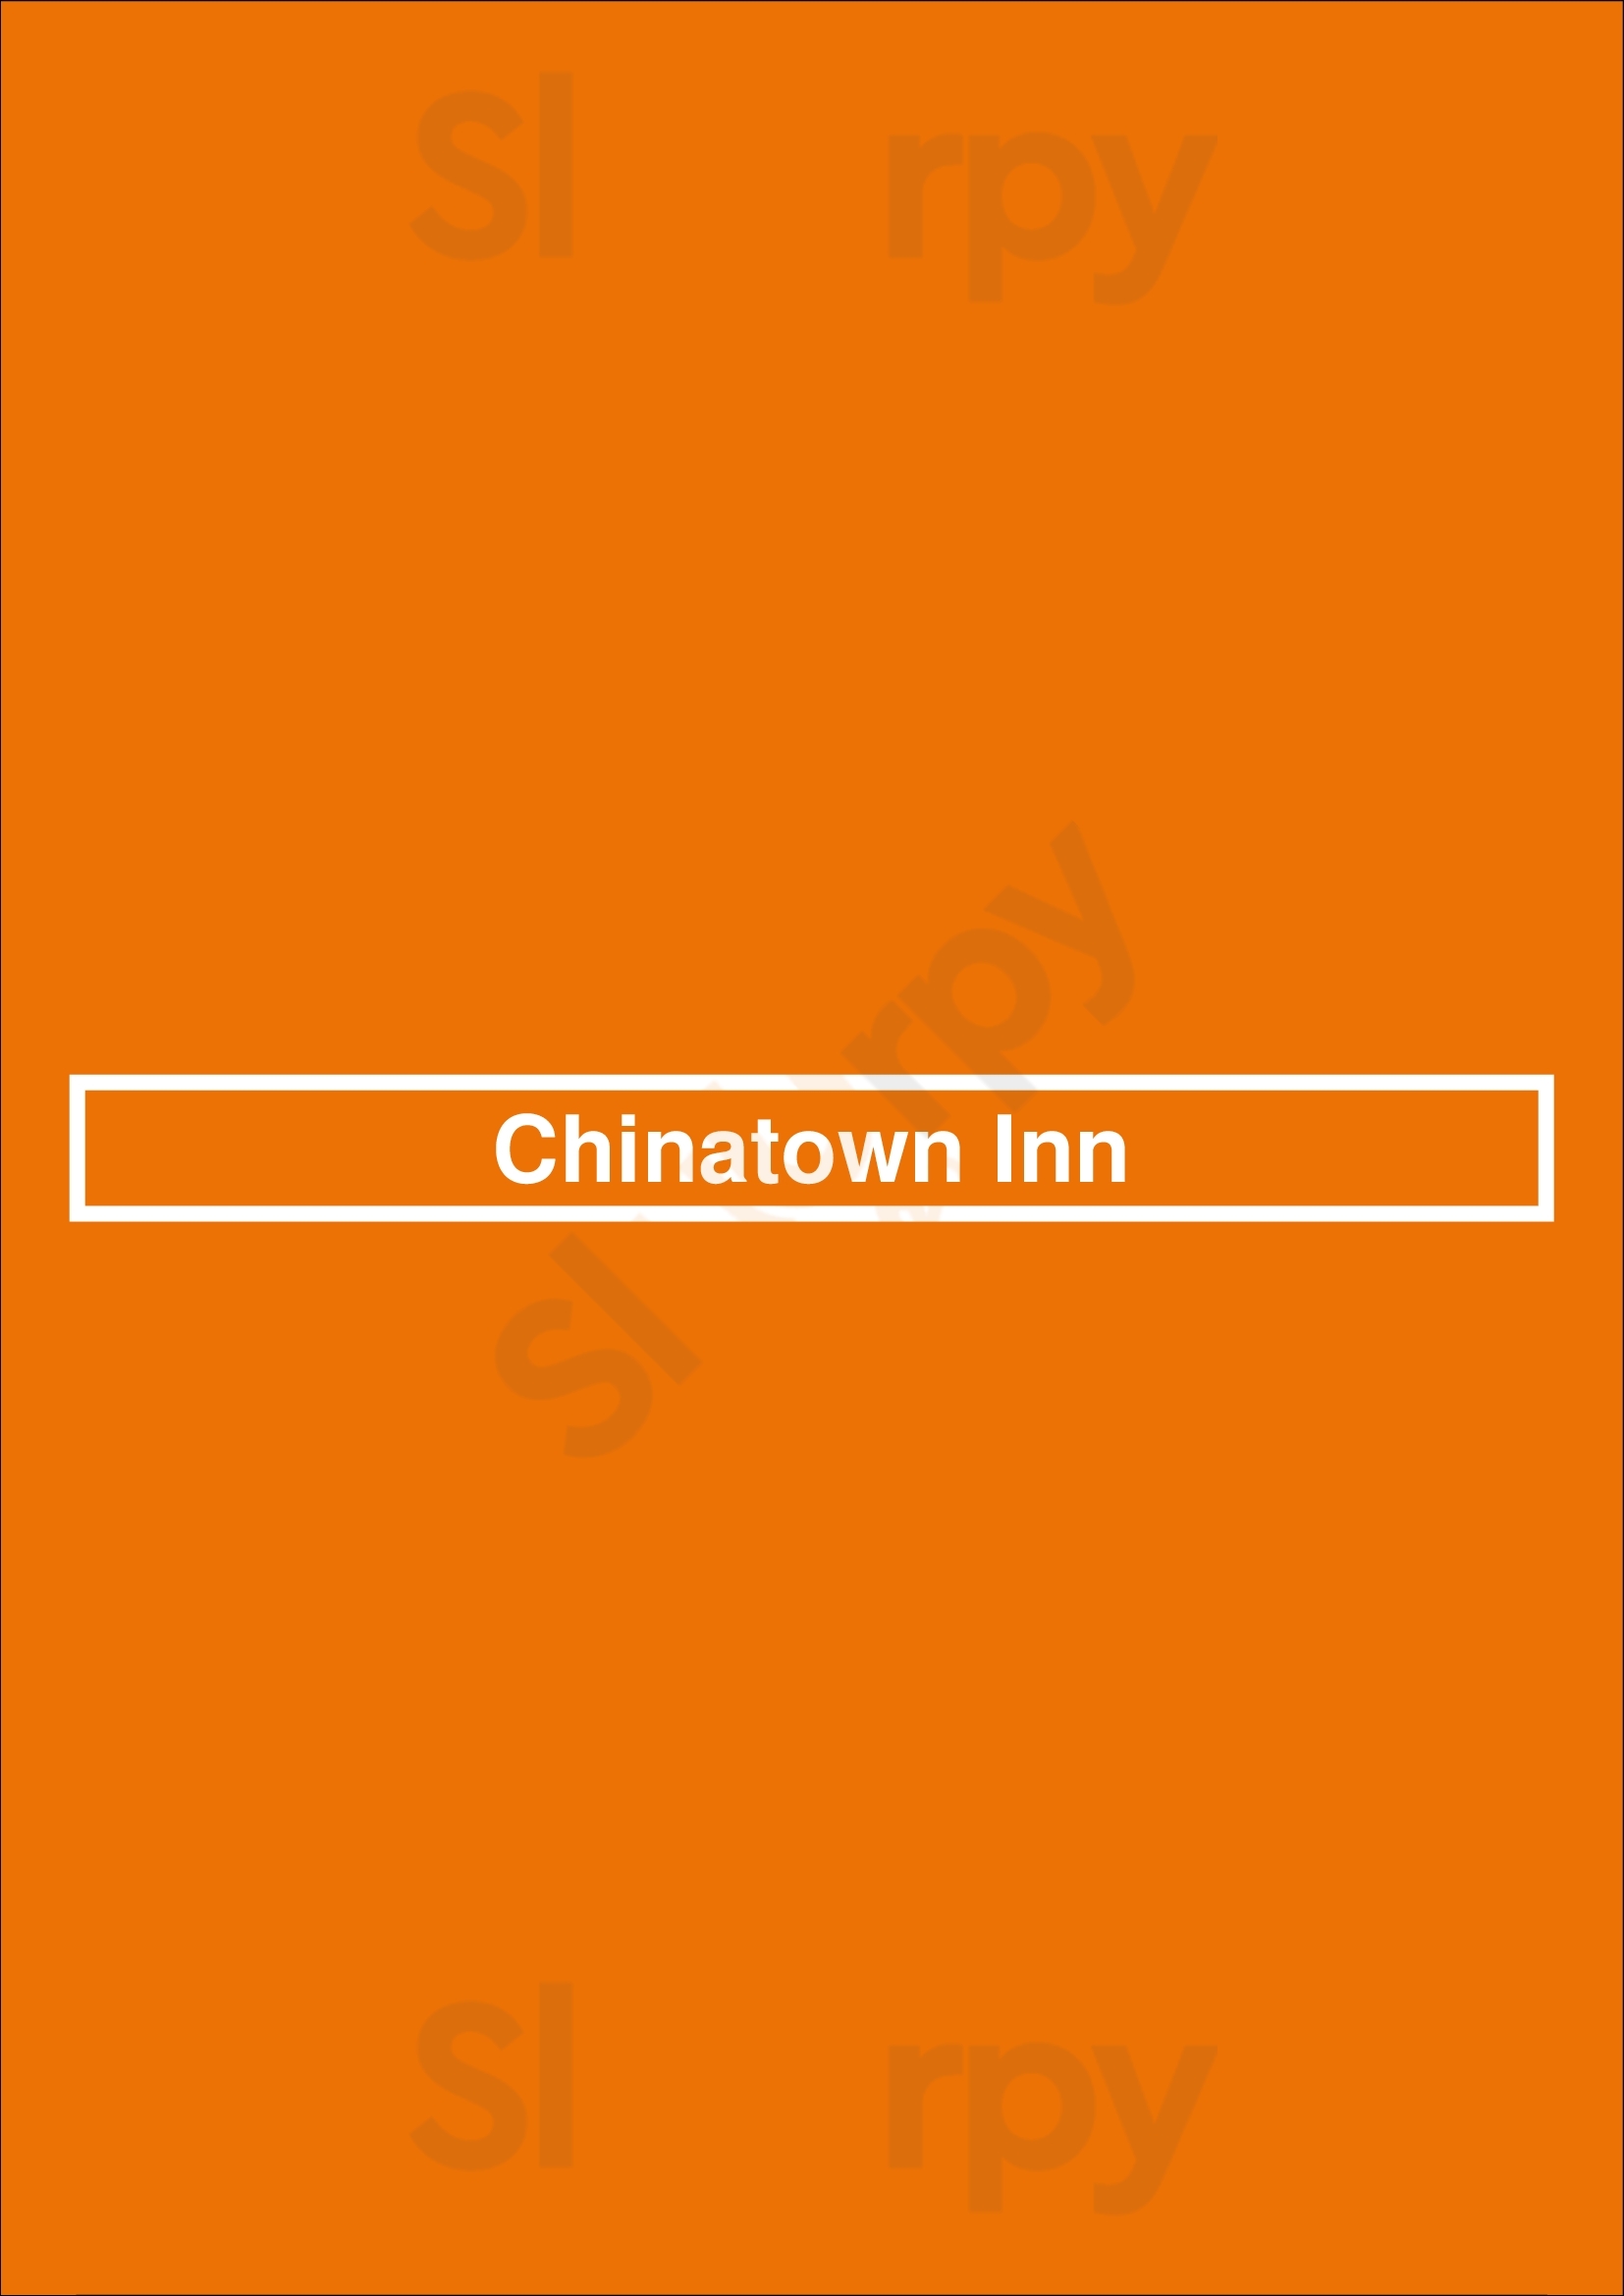 Chinatown Inn Pittsburgh Menu - 1